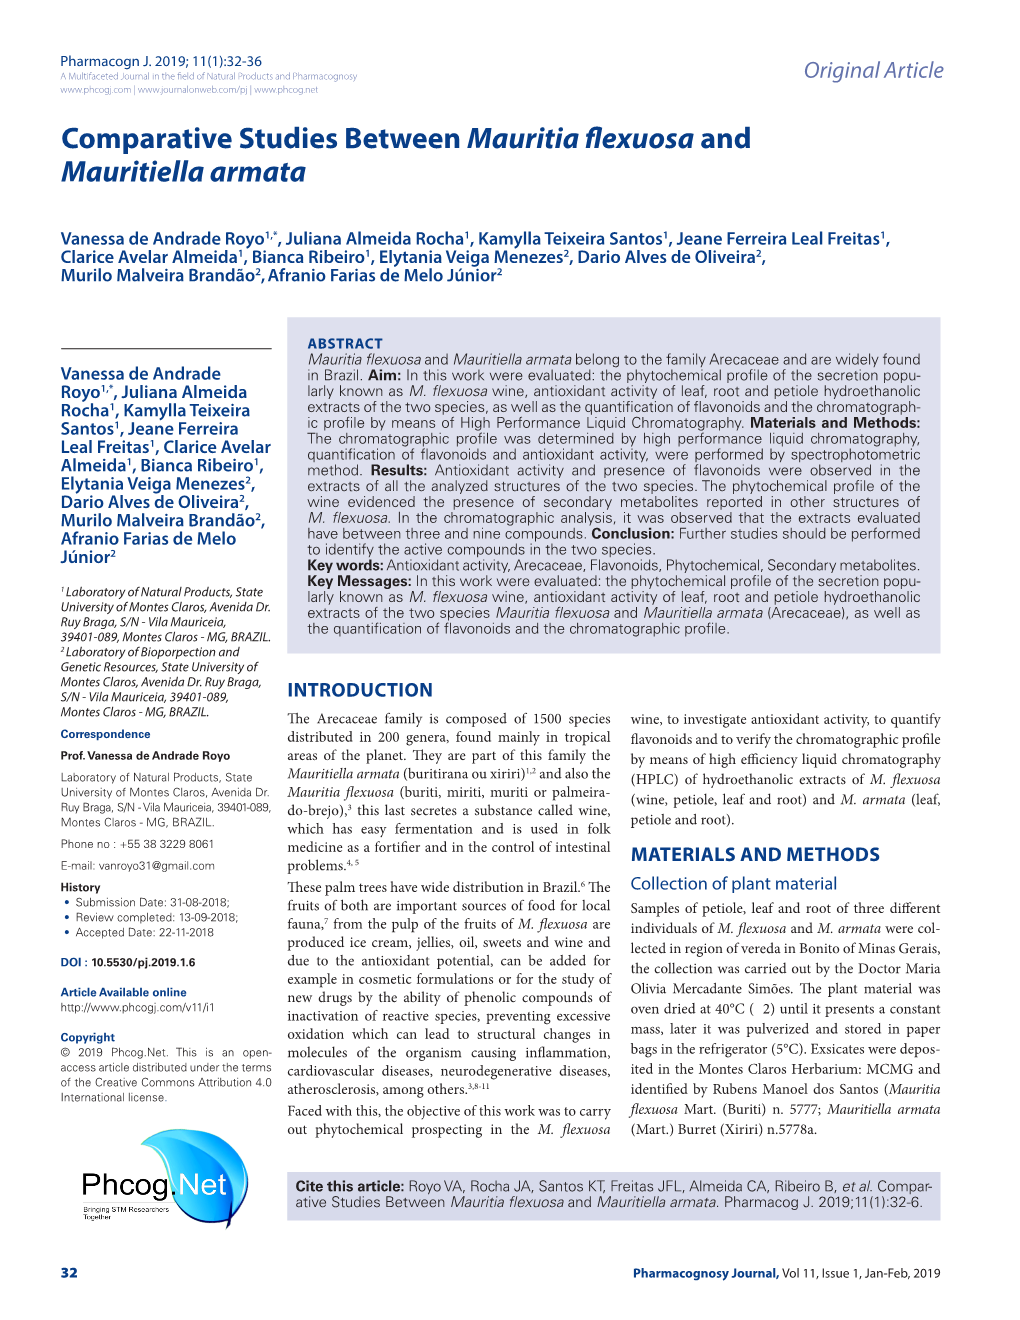 Comparative Studies Between Mauritia Flexuosa and Mauritiella Armata